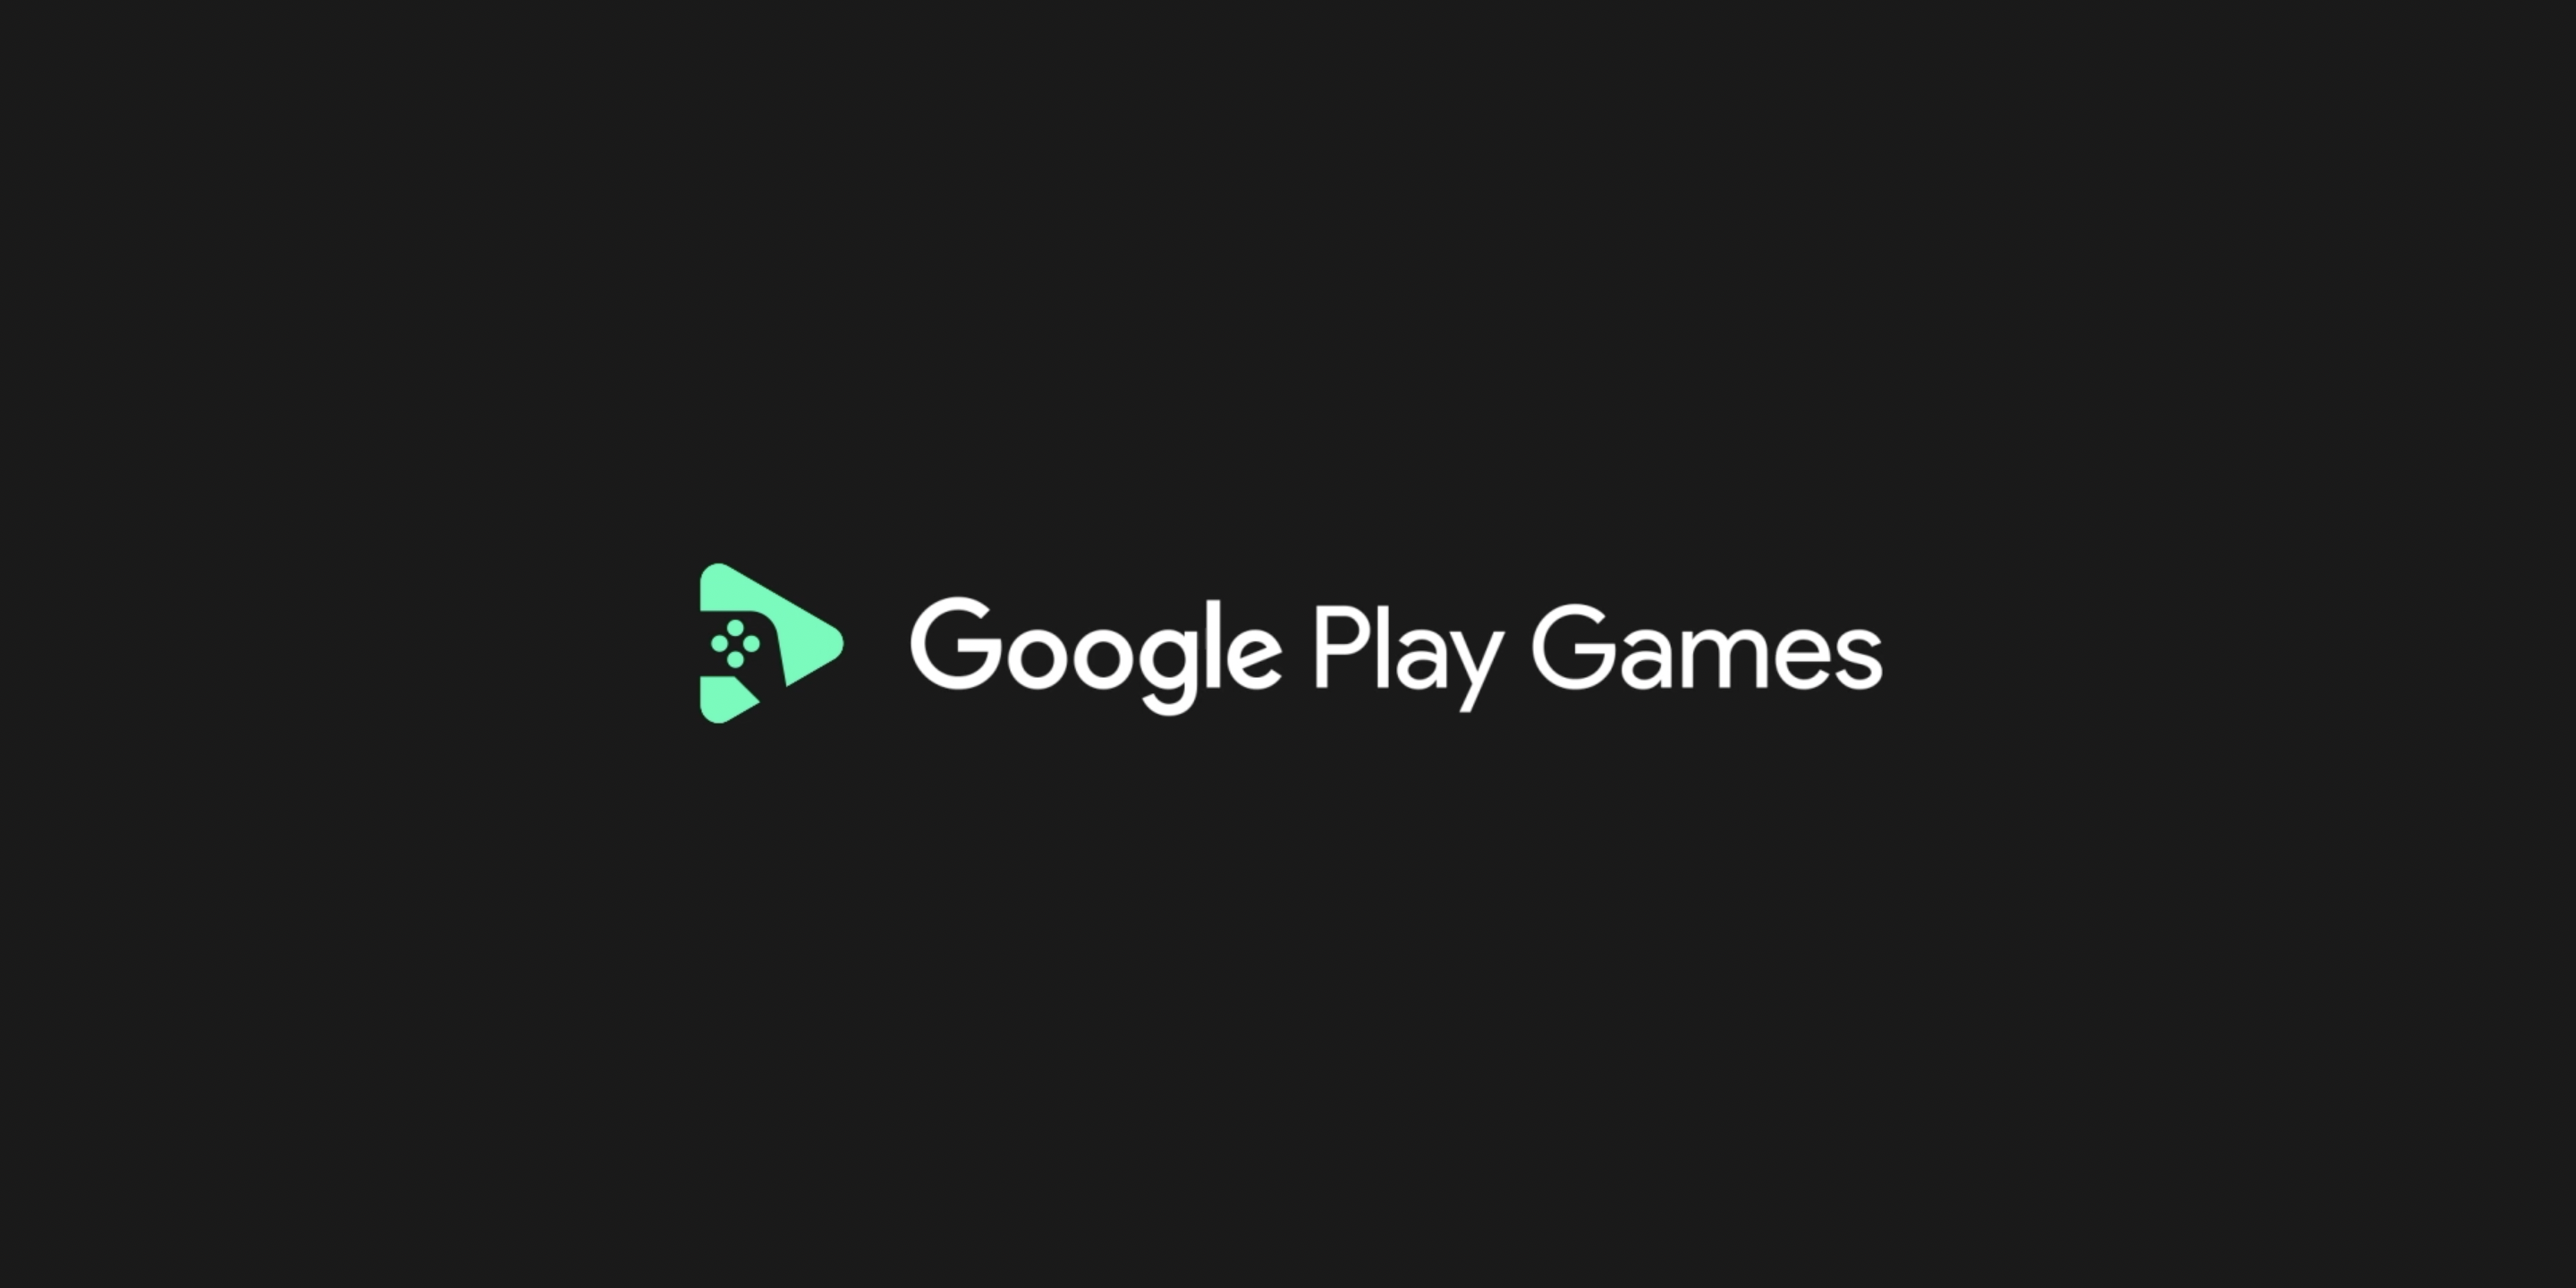 Google shows off Play Games Windows app & tech specs - 9to5Google